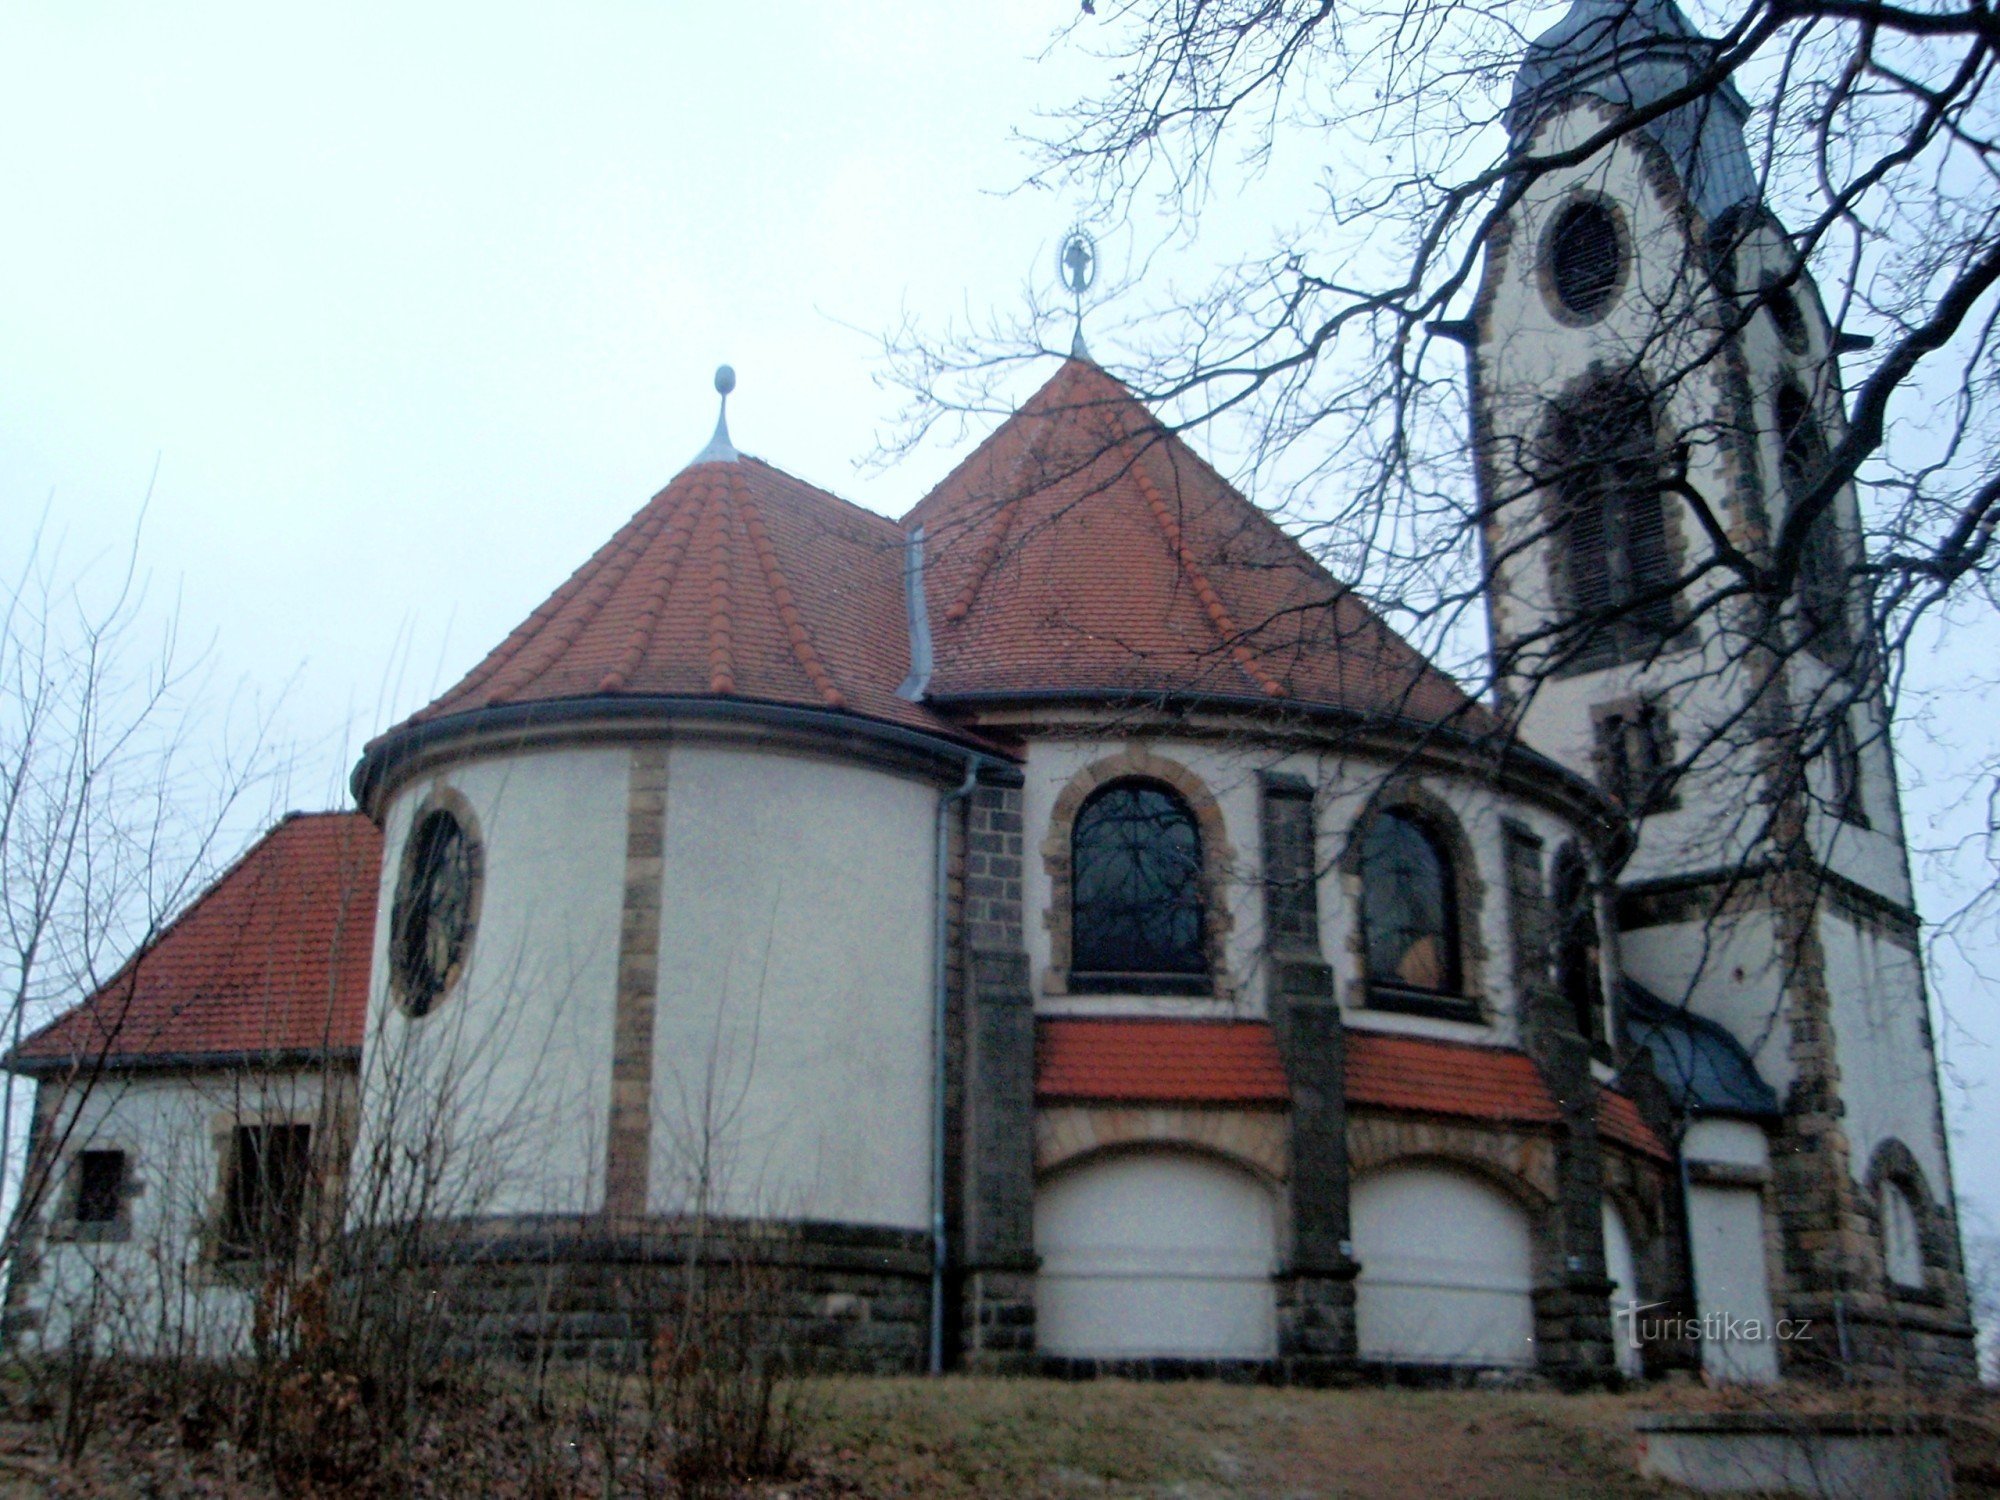 Biserica, vedere din spate